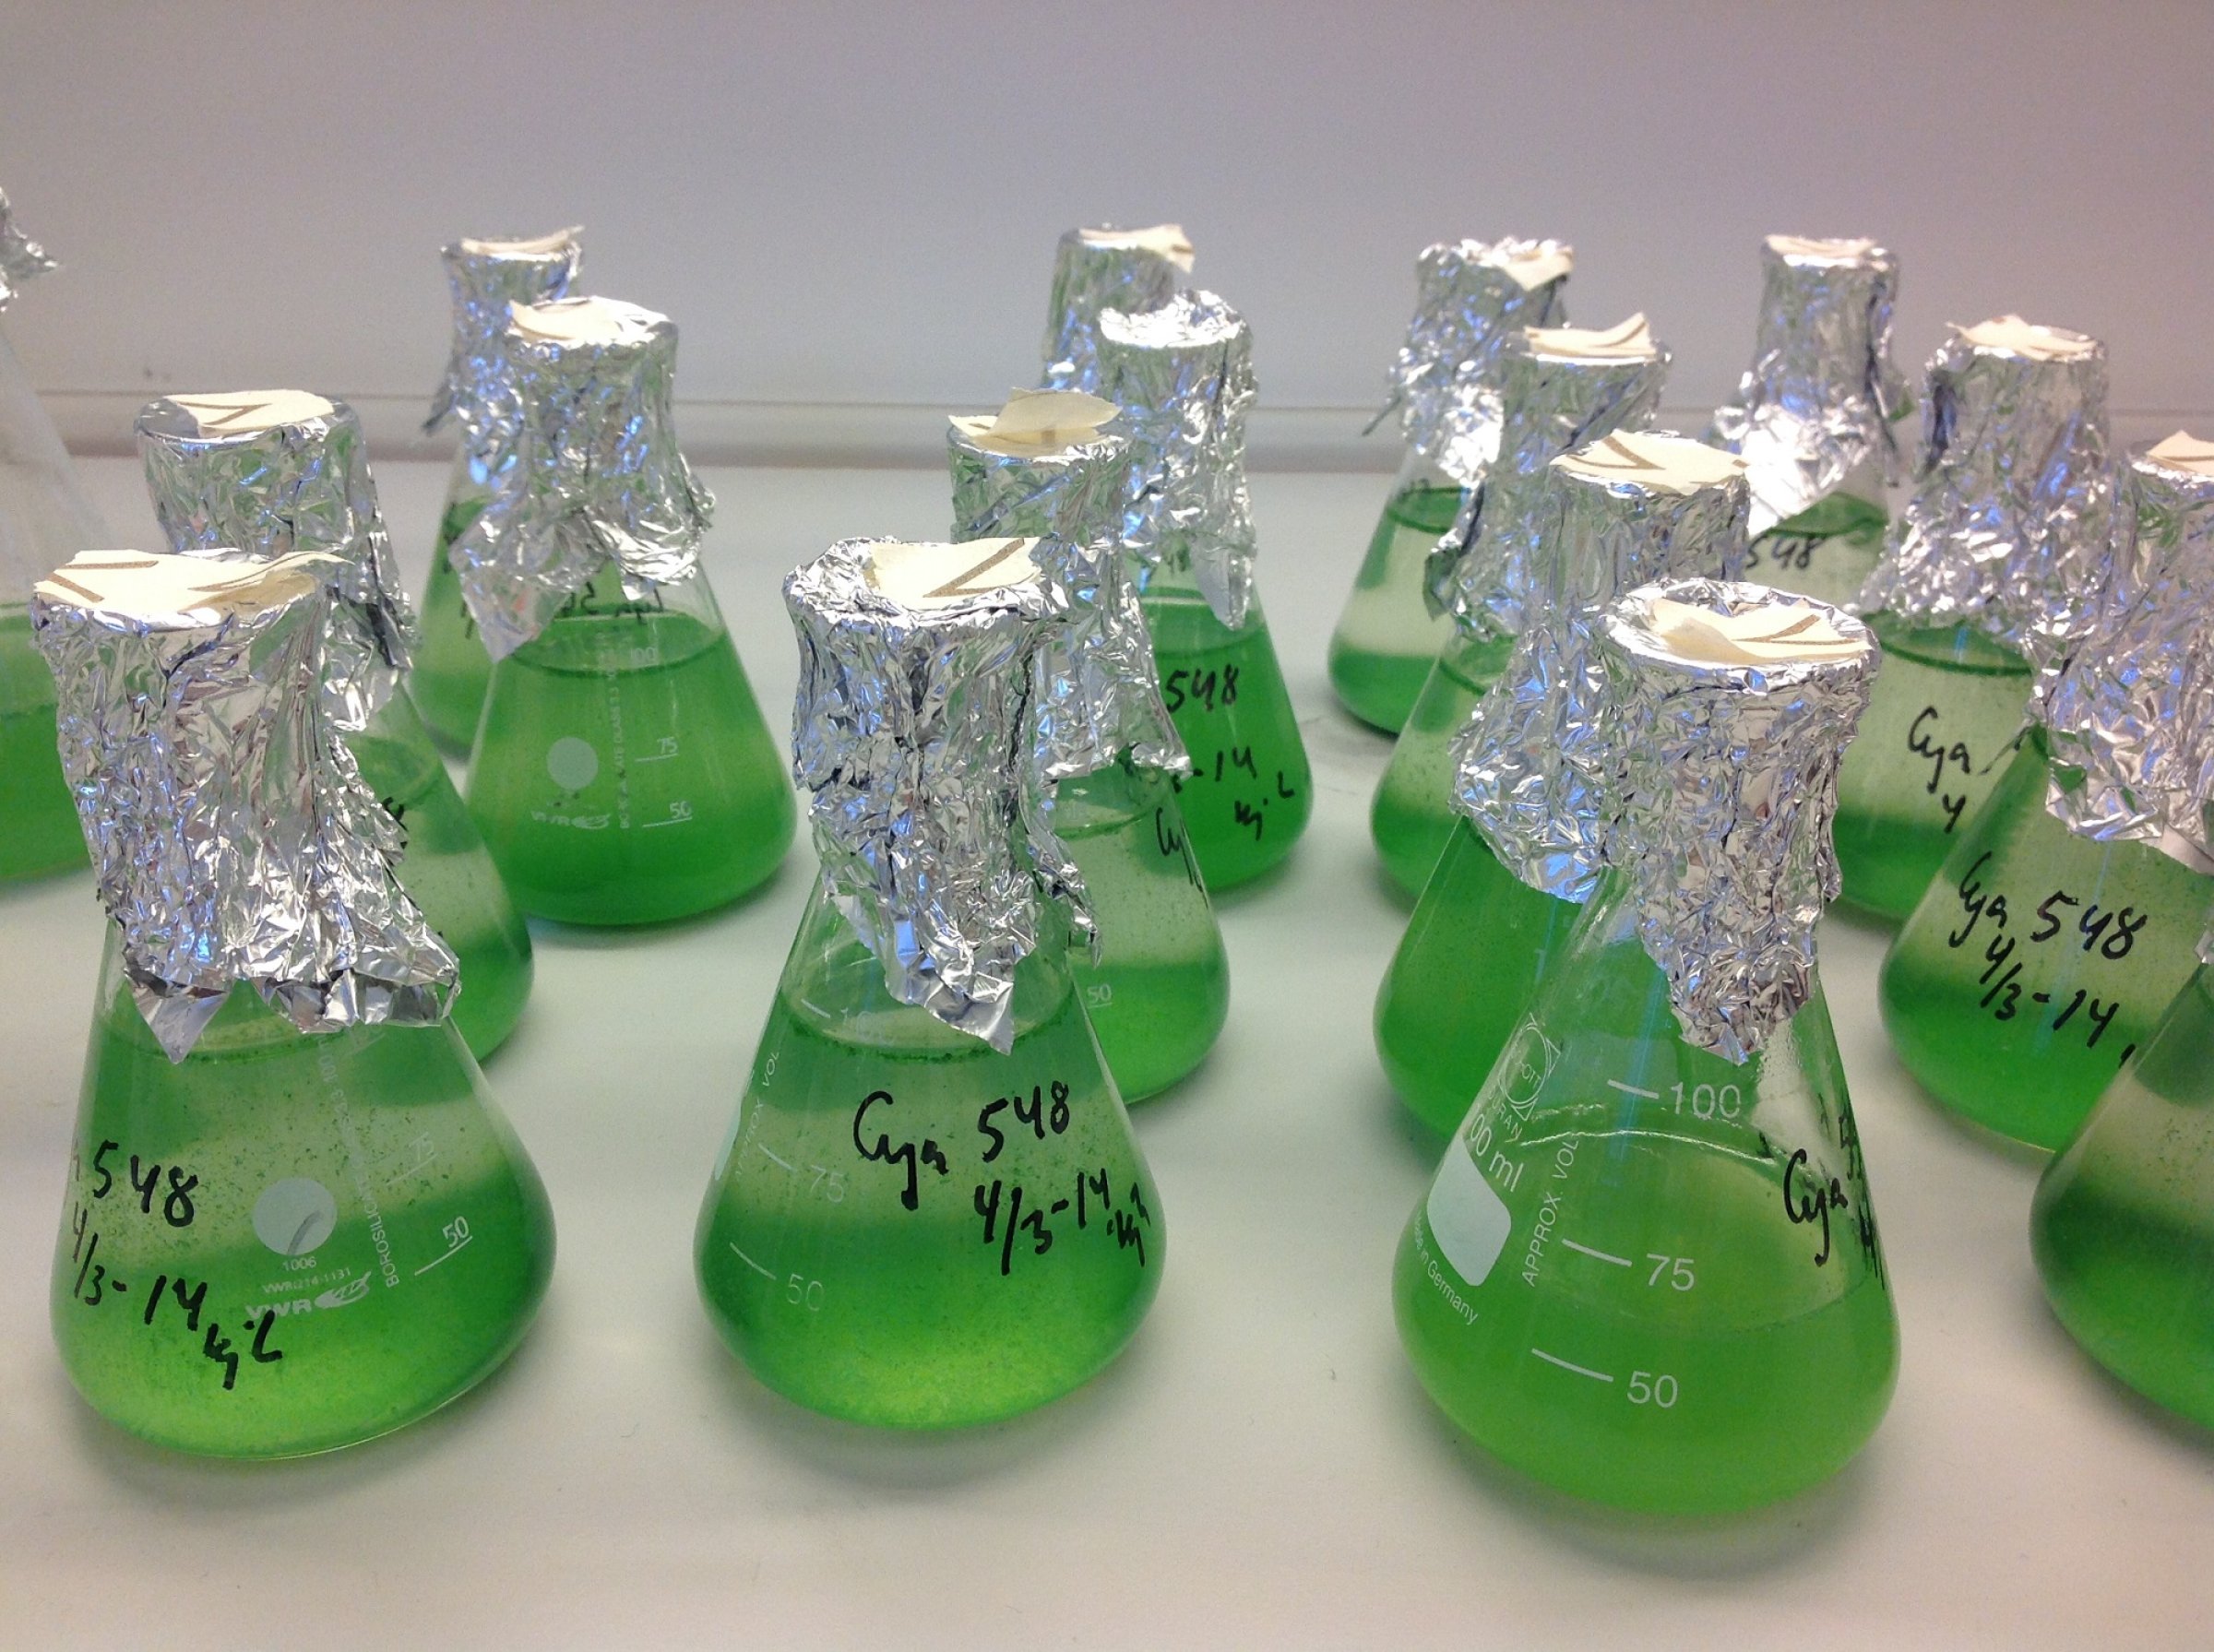 Cyanobakterier i kultur på laboratoriet. Foto: Anita Samdal